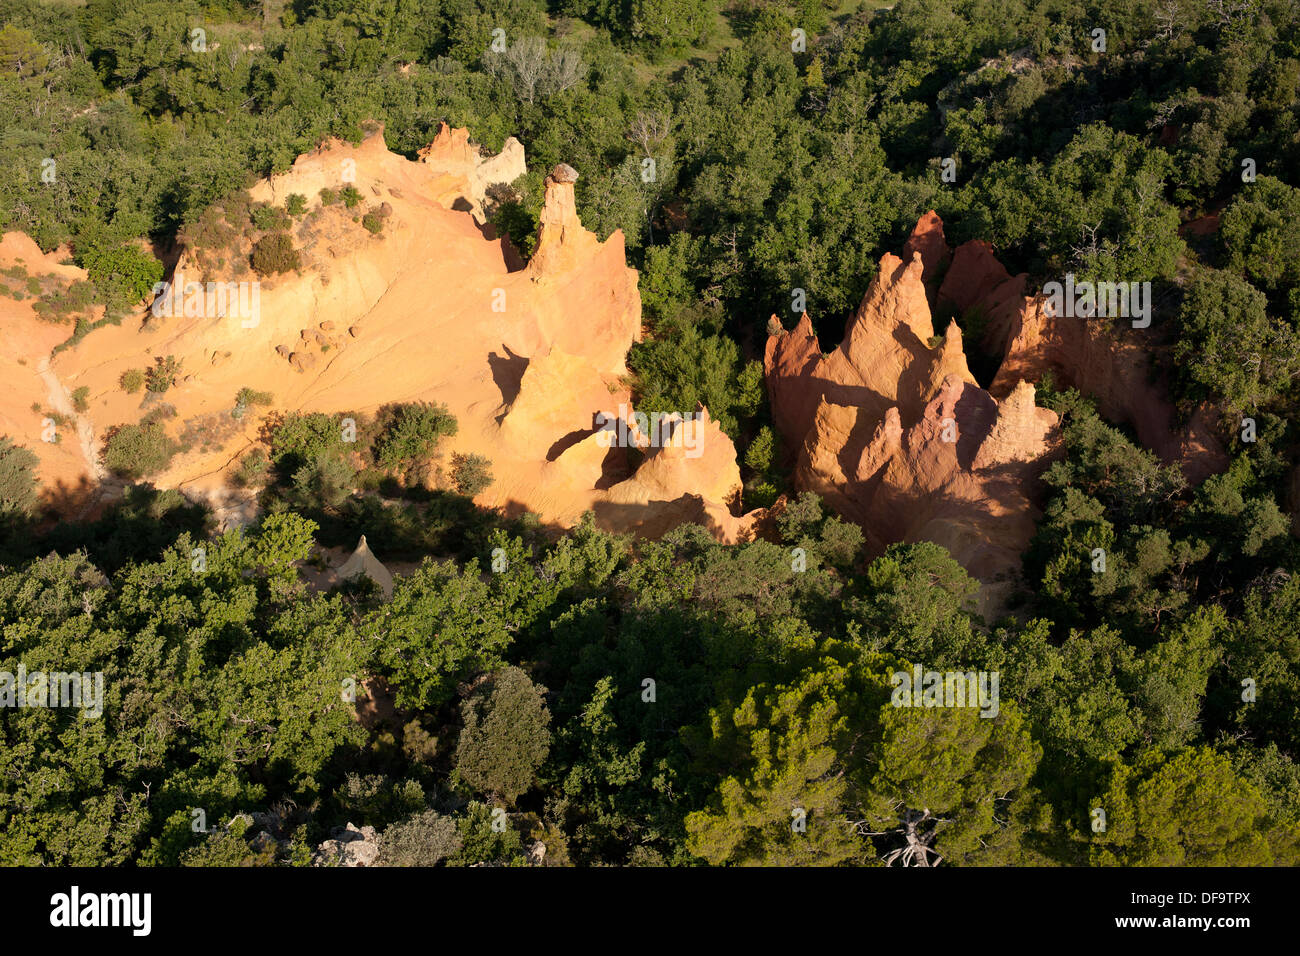 LUFTAUFNAHME. Ockerfarbene Hoodoos in scharfem Kontrast zum umgebenden grünen Laub. Rustrel, Lubéron, Vaucluse, Provence, Frankreich. Stockfoto